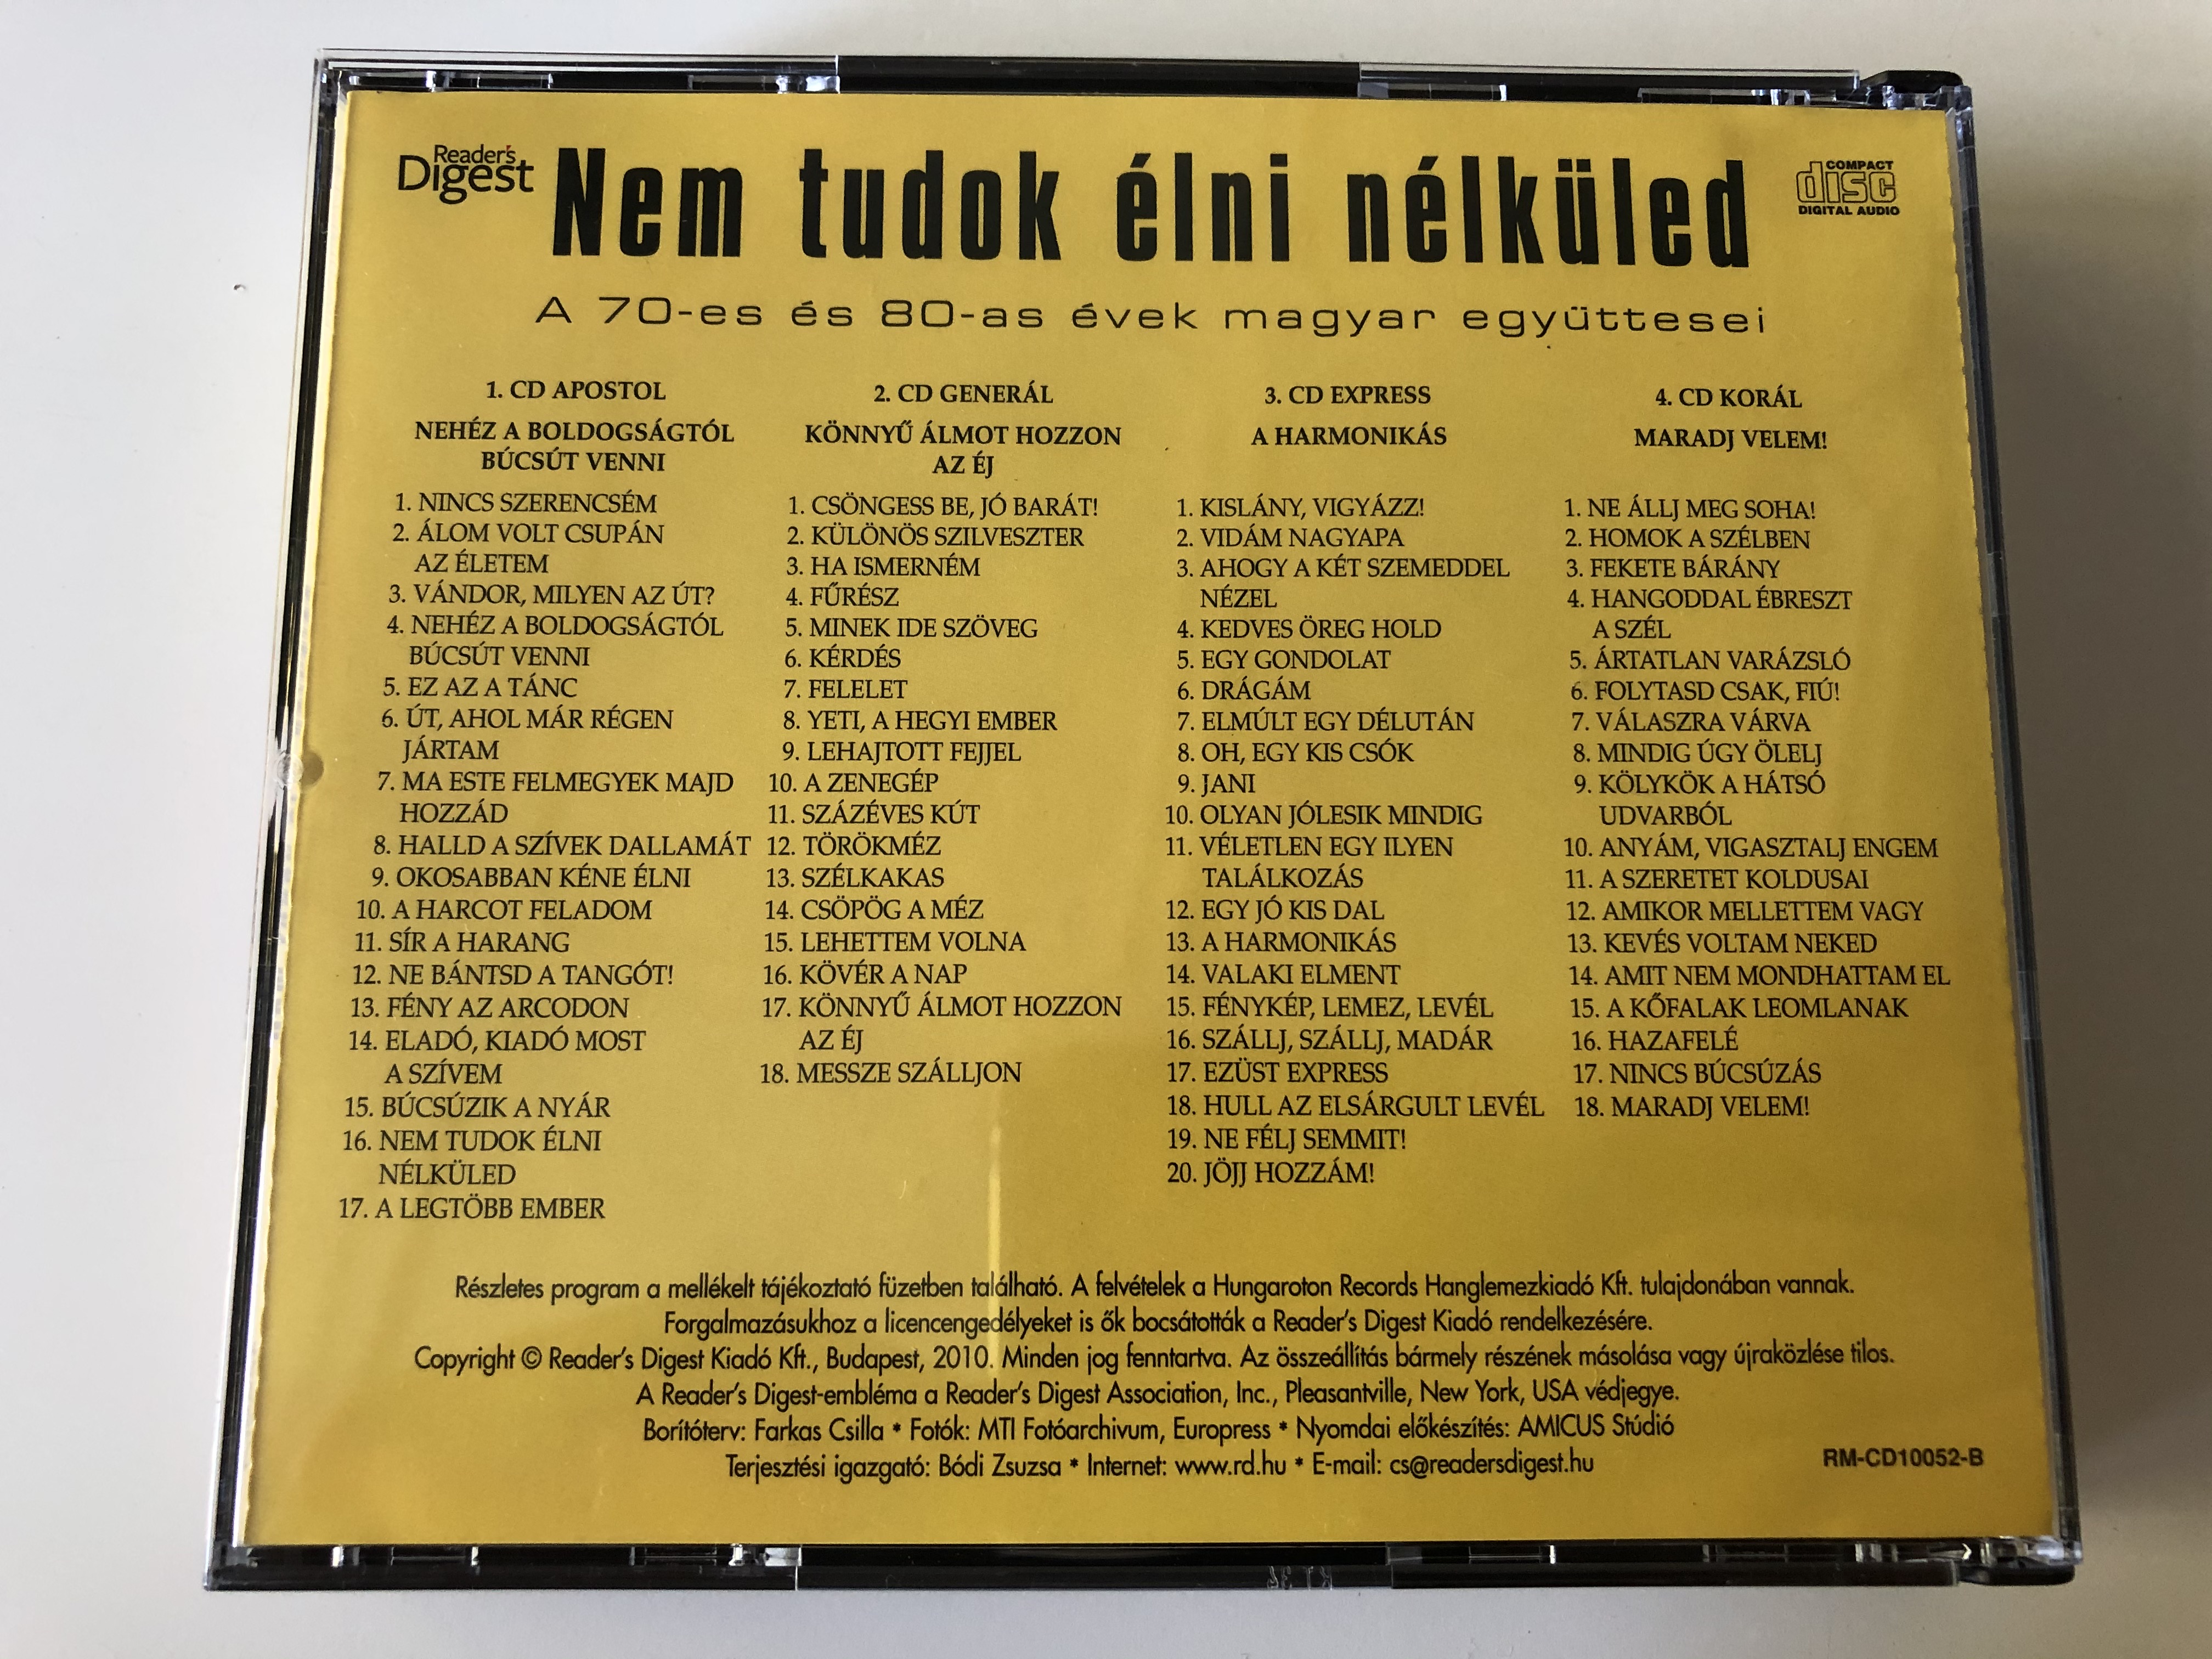 nem-tudok-lni-n-lk-led-a-70-es-es-80-as-evek-magyar-egyuttesei-apostol-general-express-koral-reader-s-digest-hungary-4x-audio-cd-2010-rm-cd10052-1-4-7-.jpg